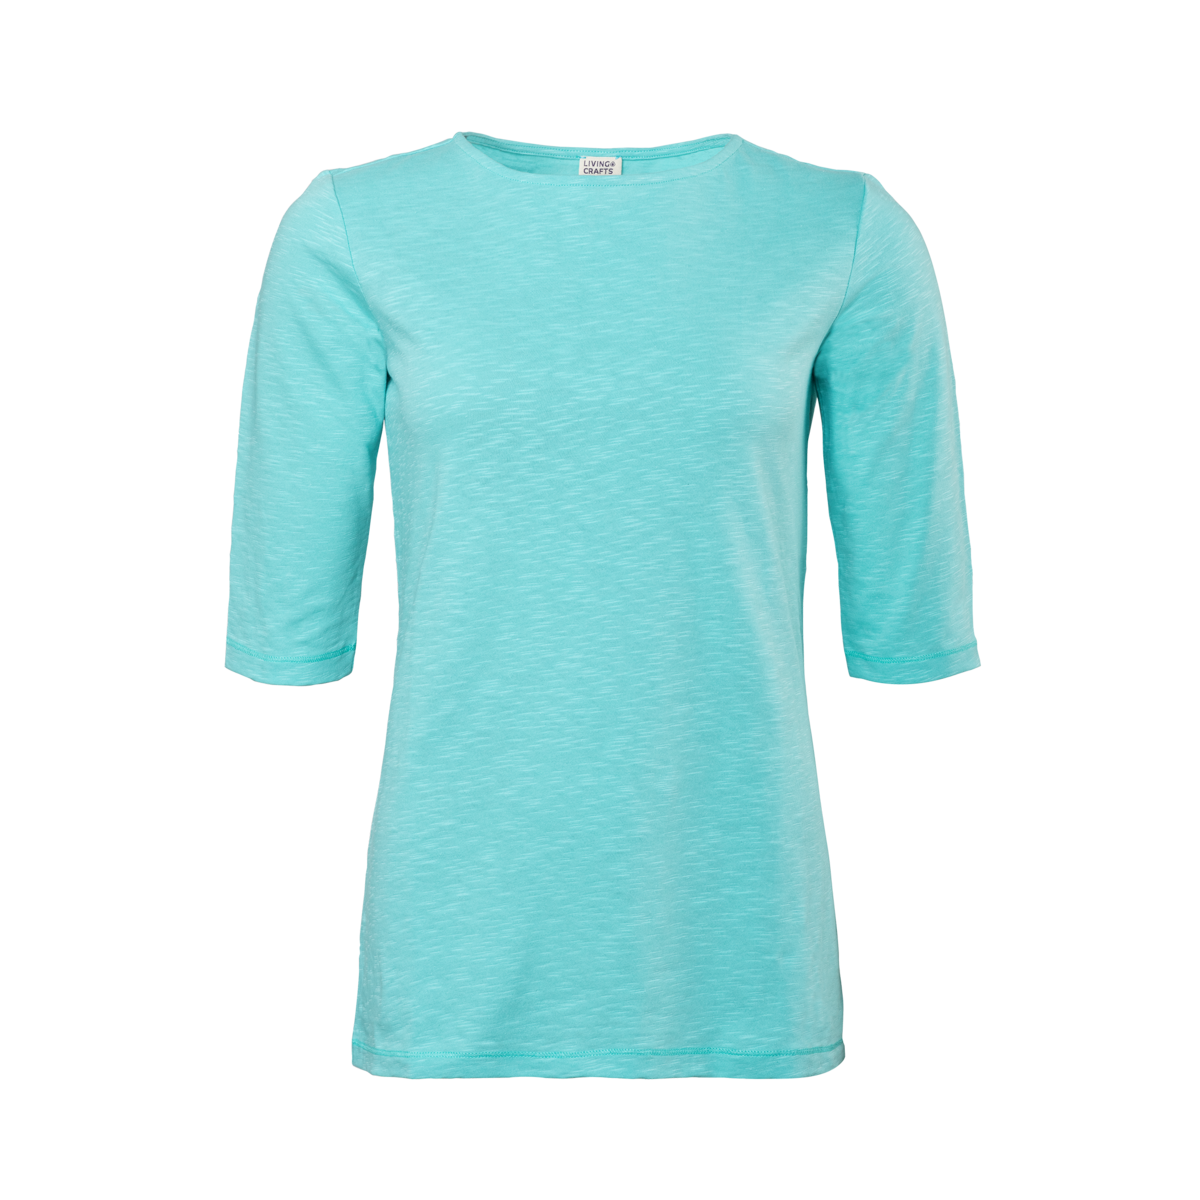 Turquoise Shirt, CHLOE